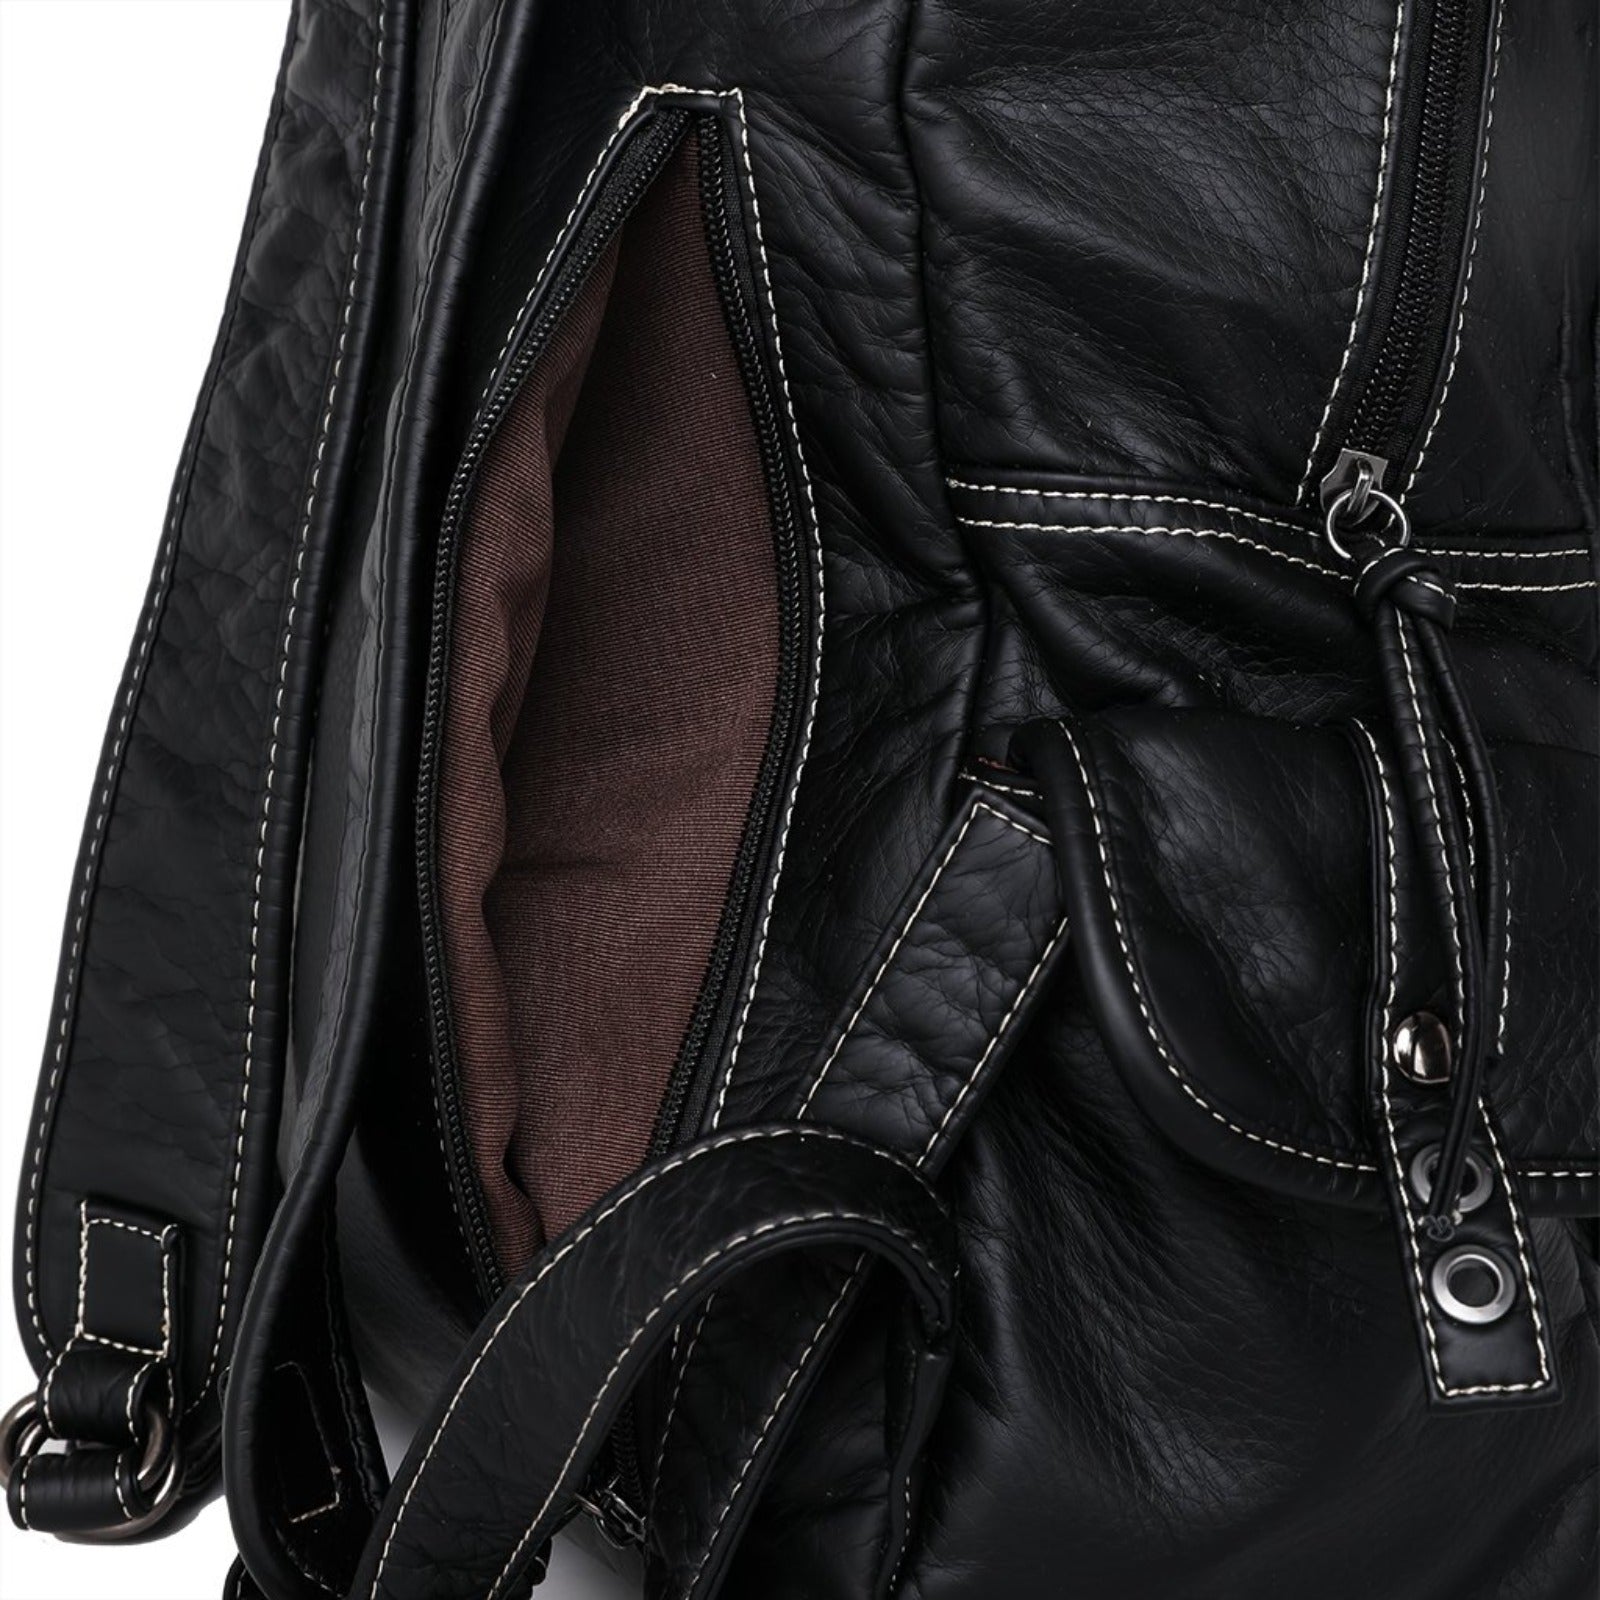 Wrangler Backpack for Women - Cowgirl Wear